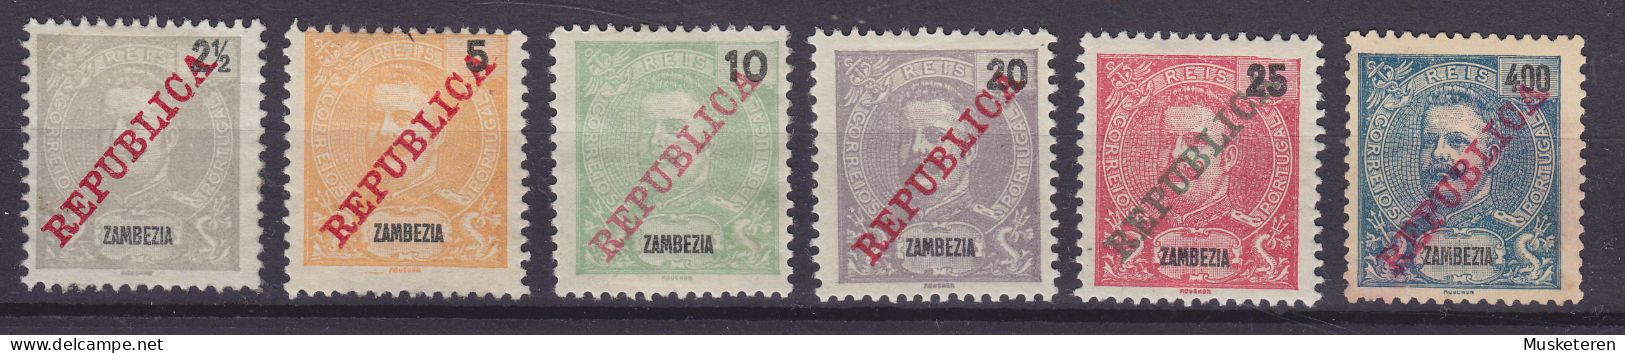 Zambezia 1911 Mi. 55-57, 59-60, 67 König Karl I. Overprinted REPUBLICA, MH*/MNG (*) (2 Scans) - Zambezië